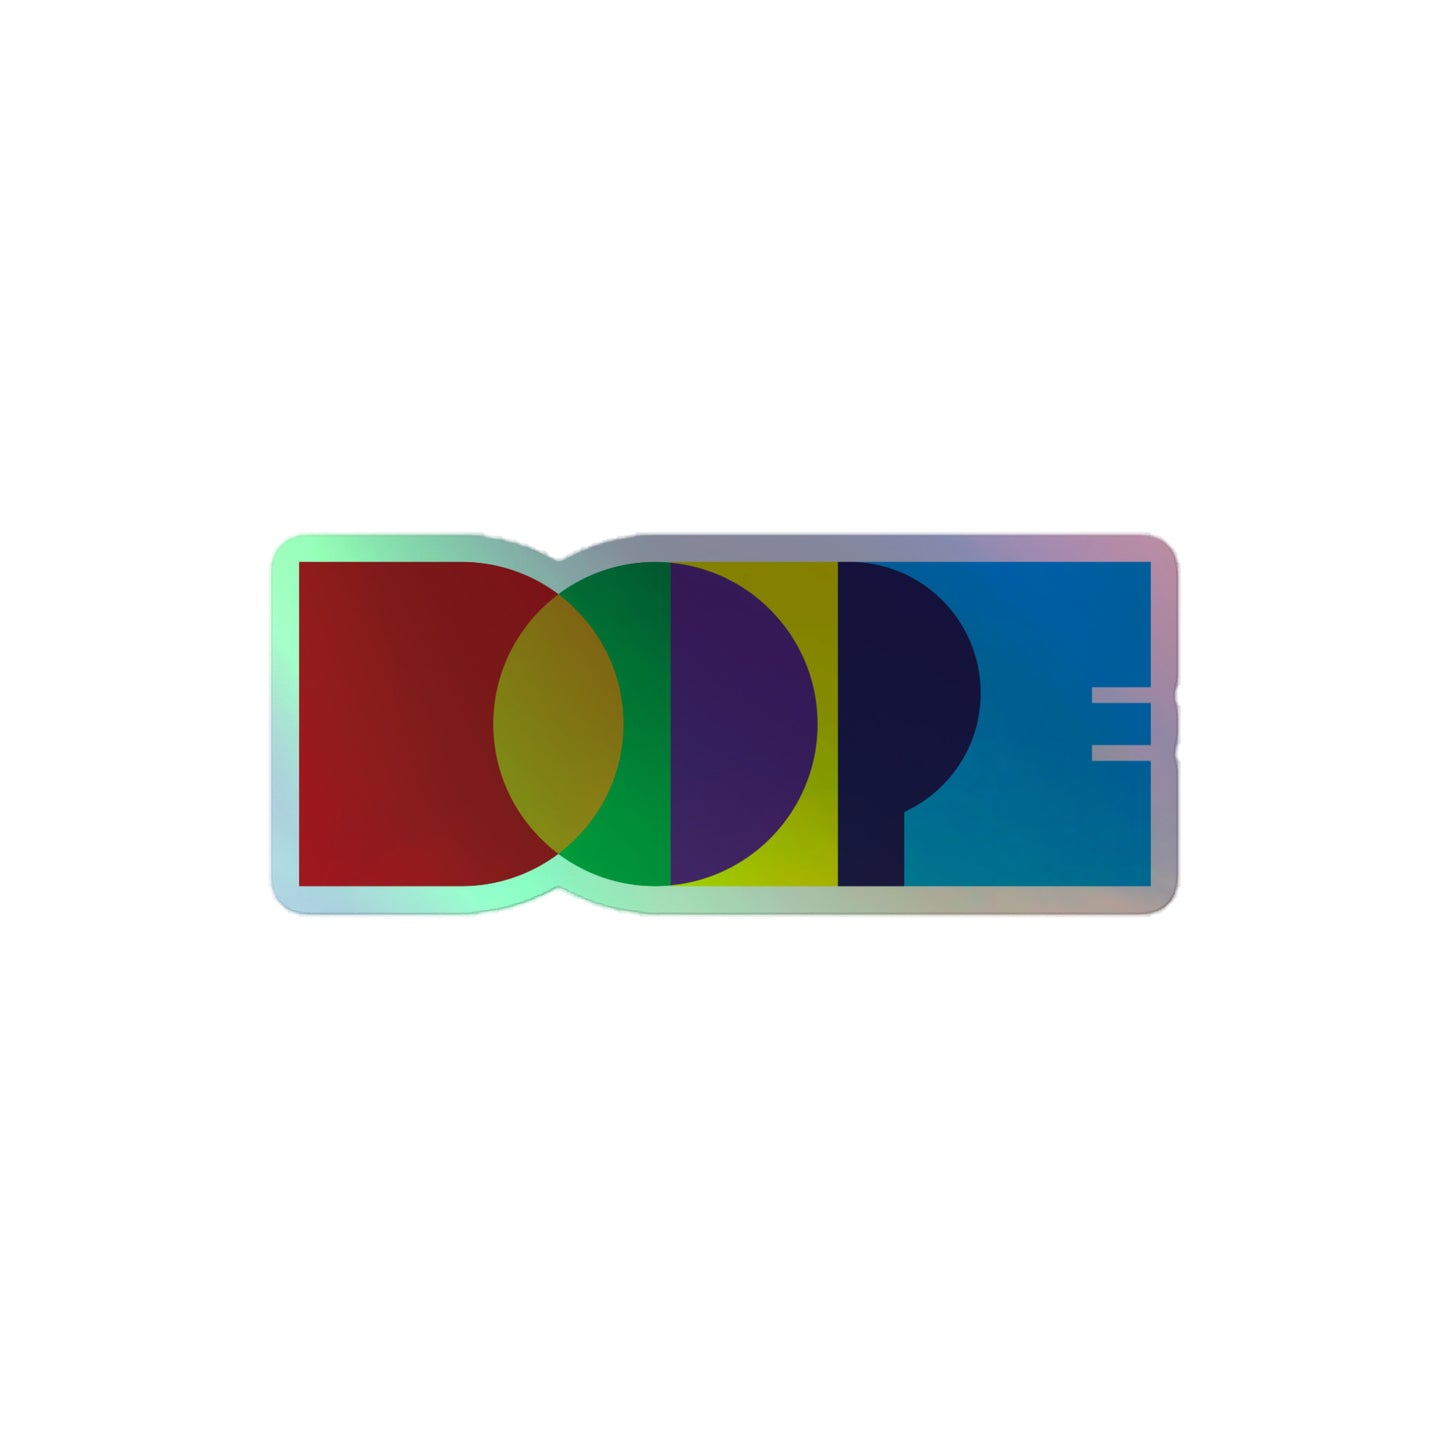 DOPE holographic sticker